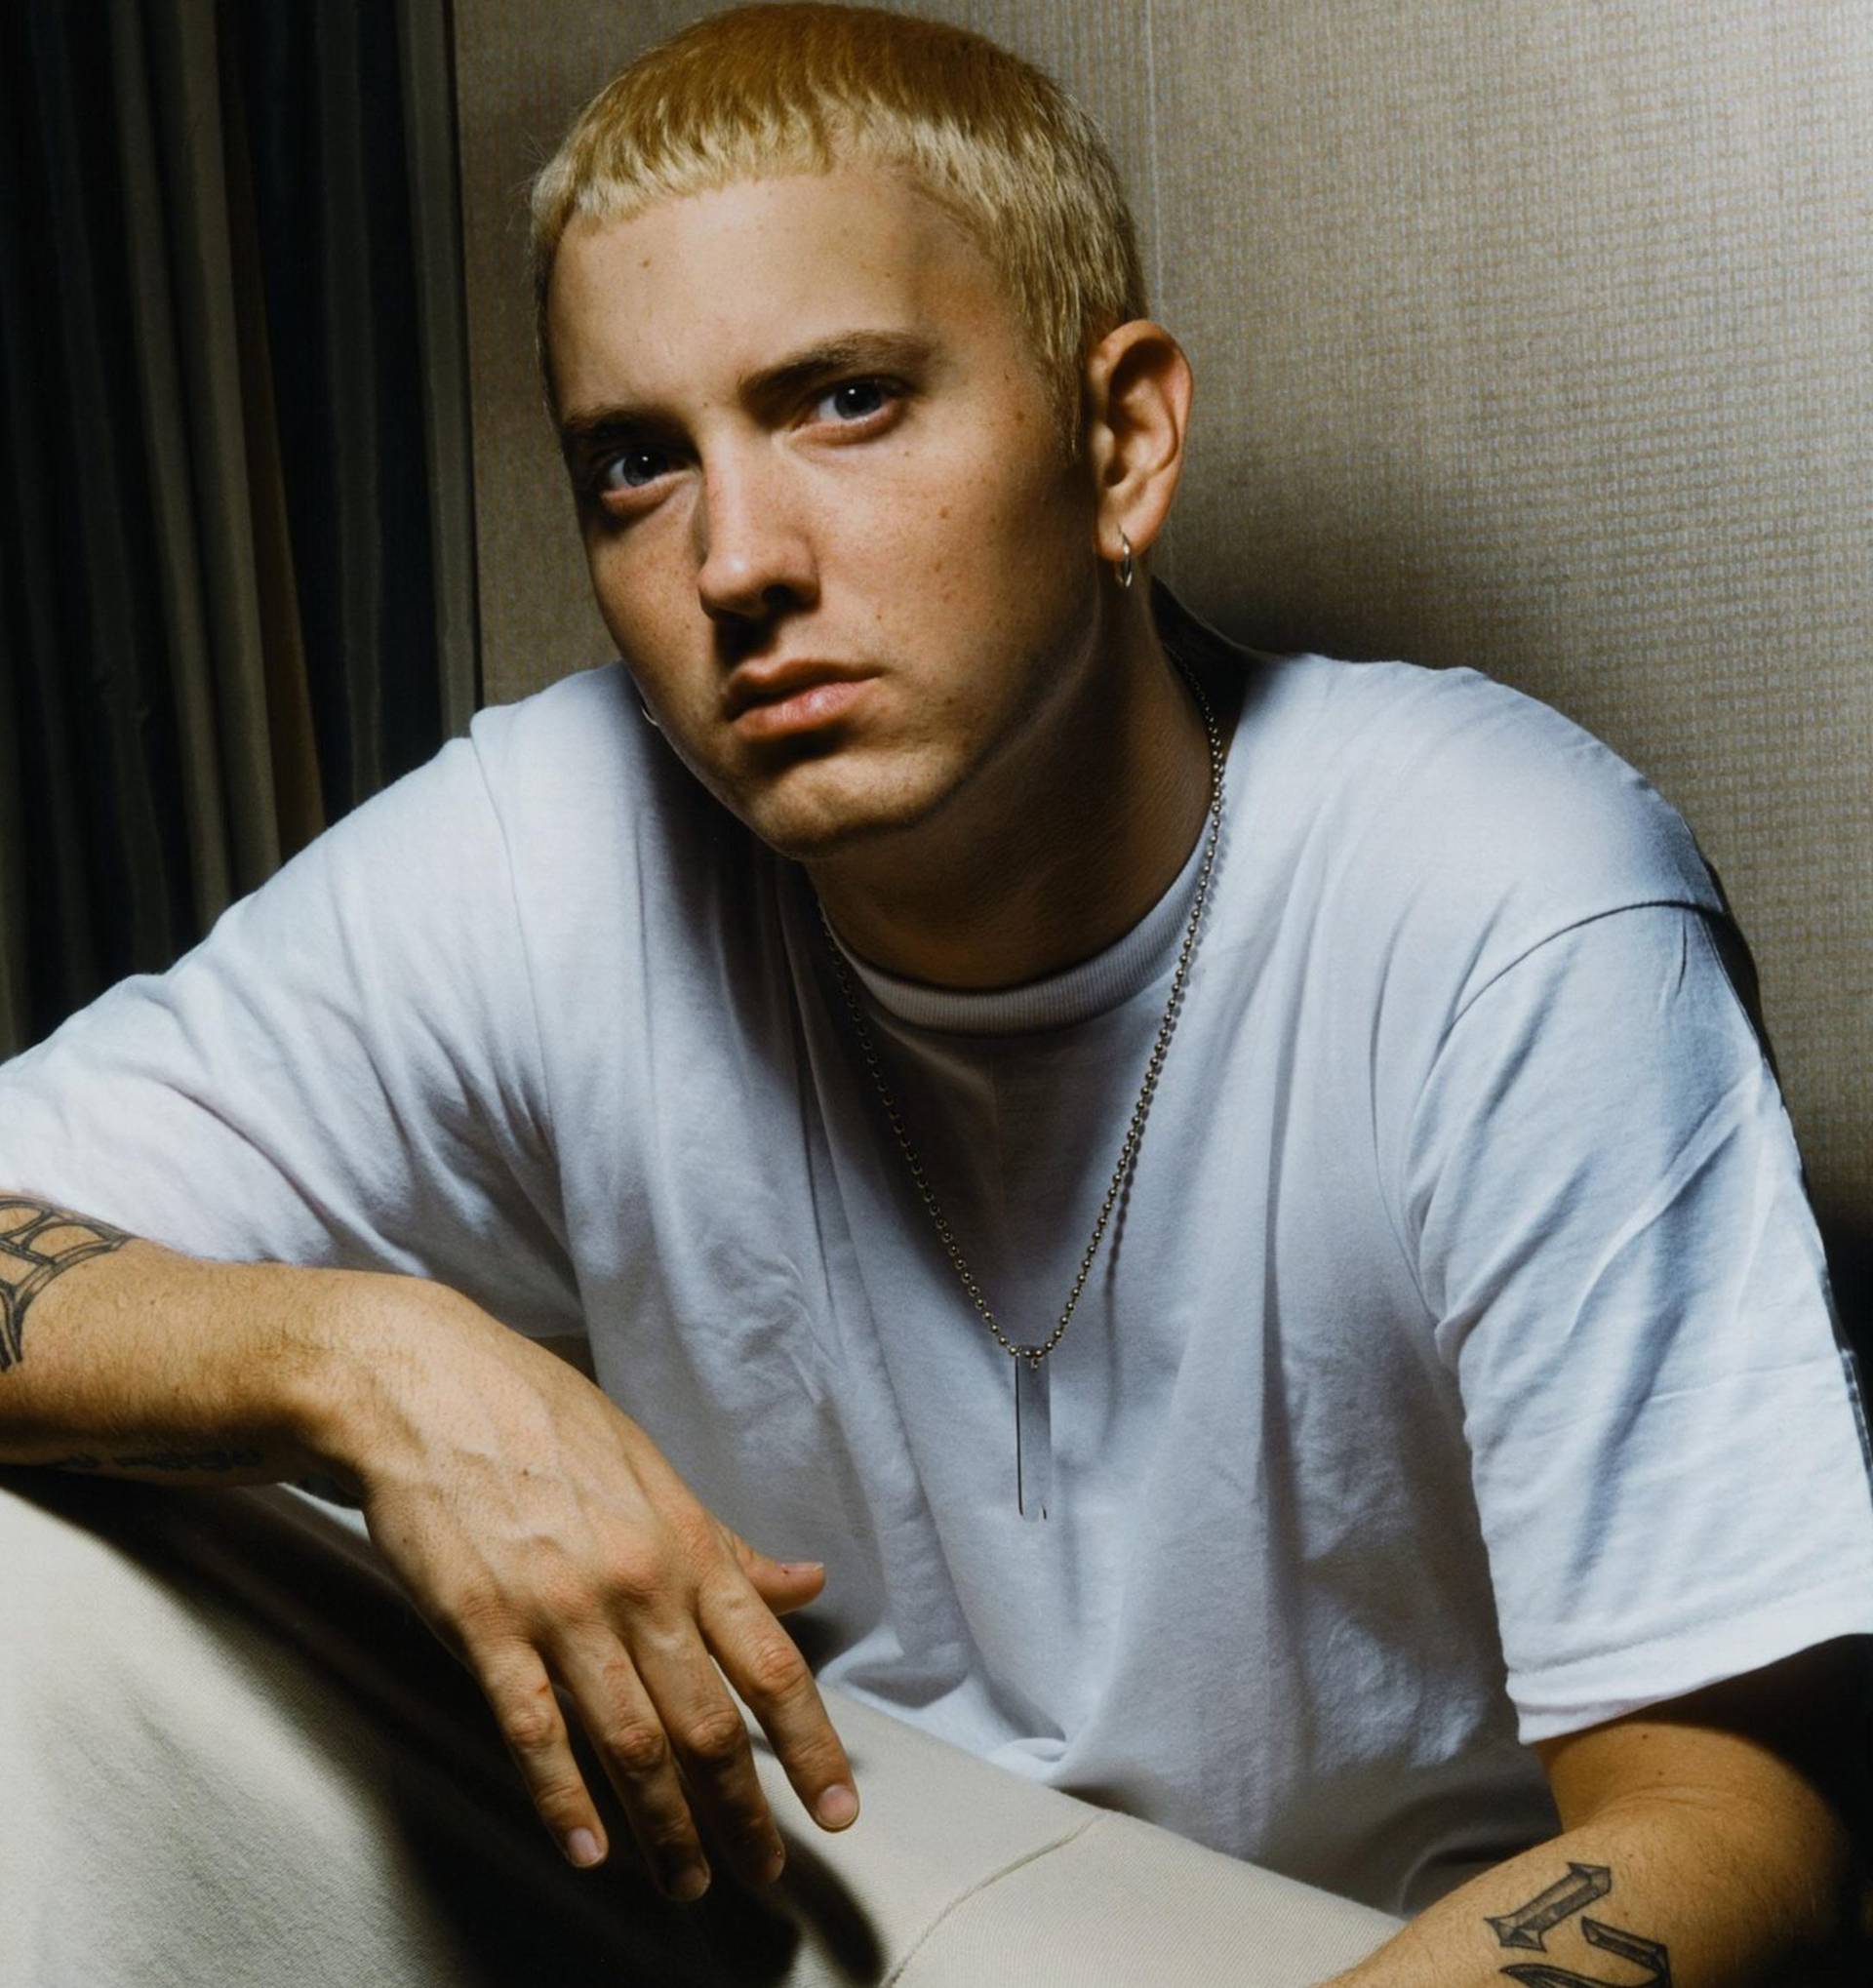 Preminuo Eminemov otac (67): Reper ga nikad nije upoznao...